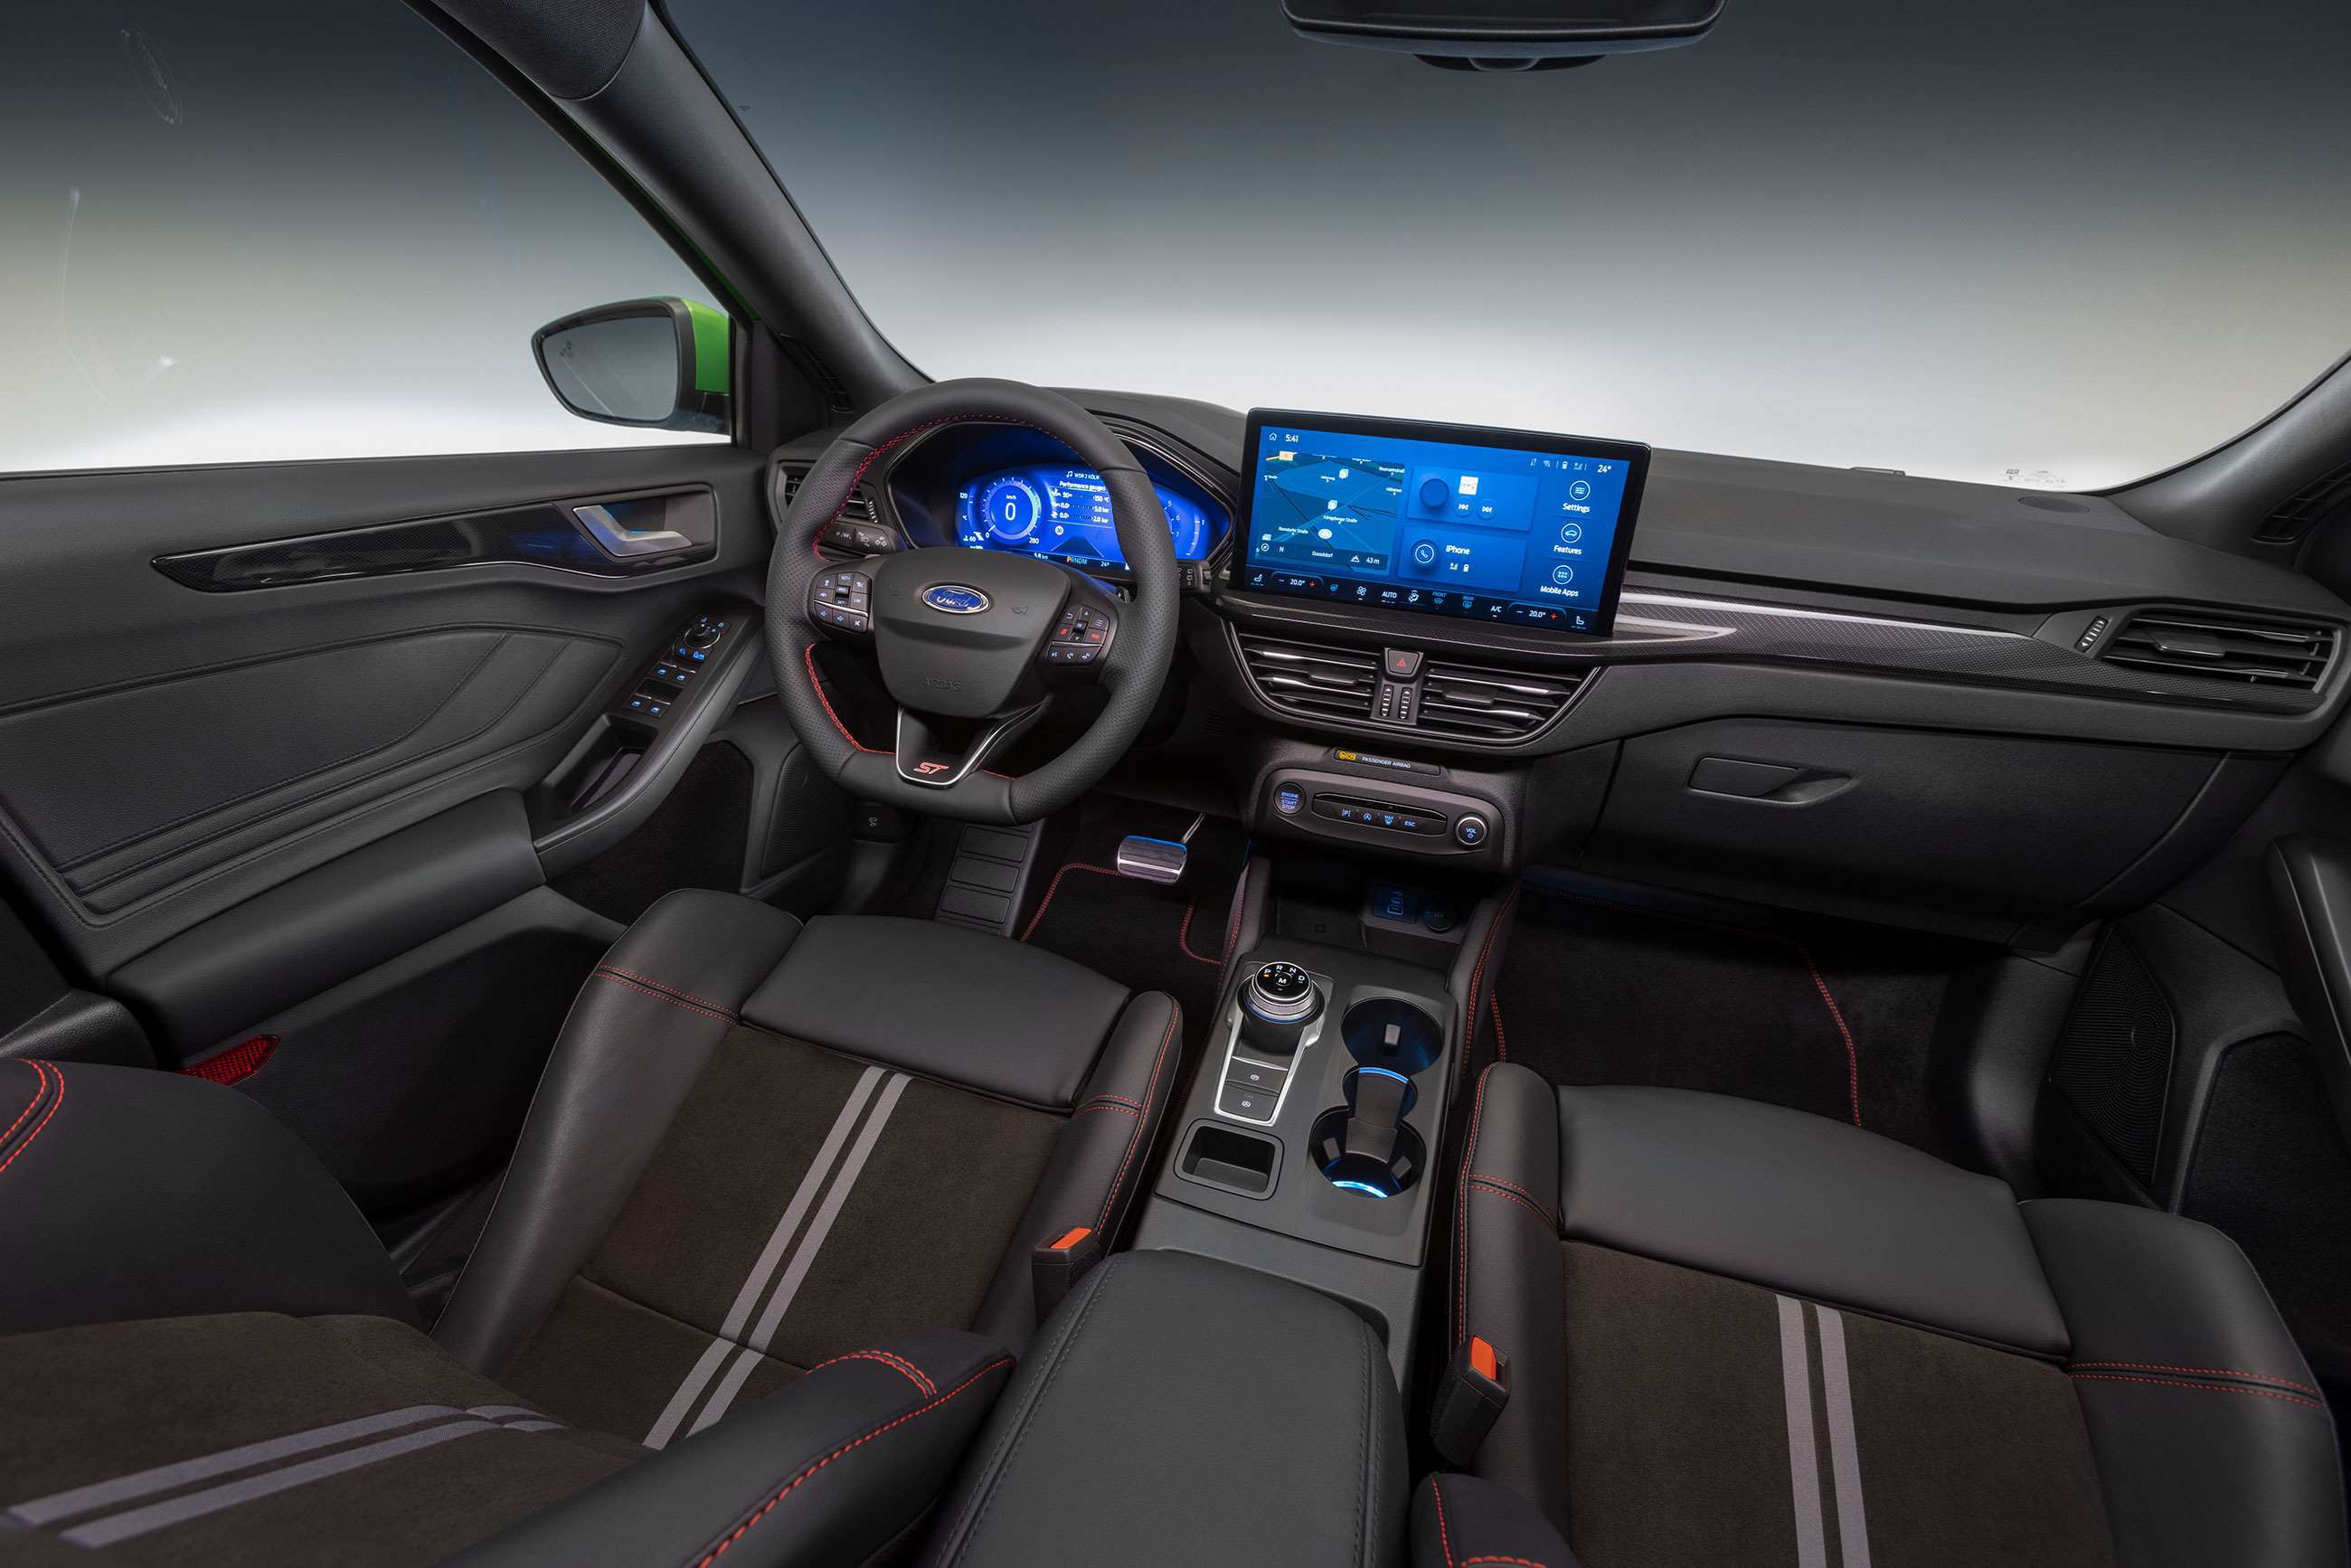 ford-focus-st-2022-interior-goodwood-14102021.jpg